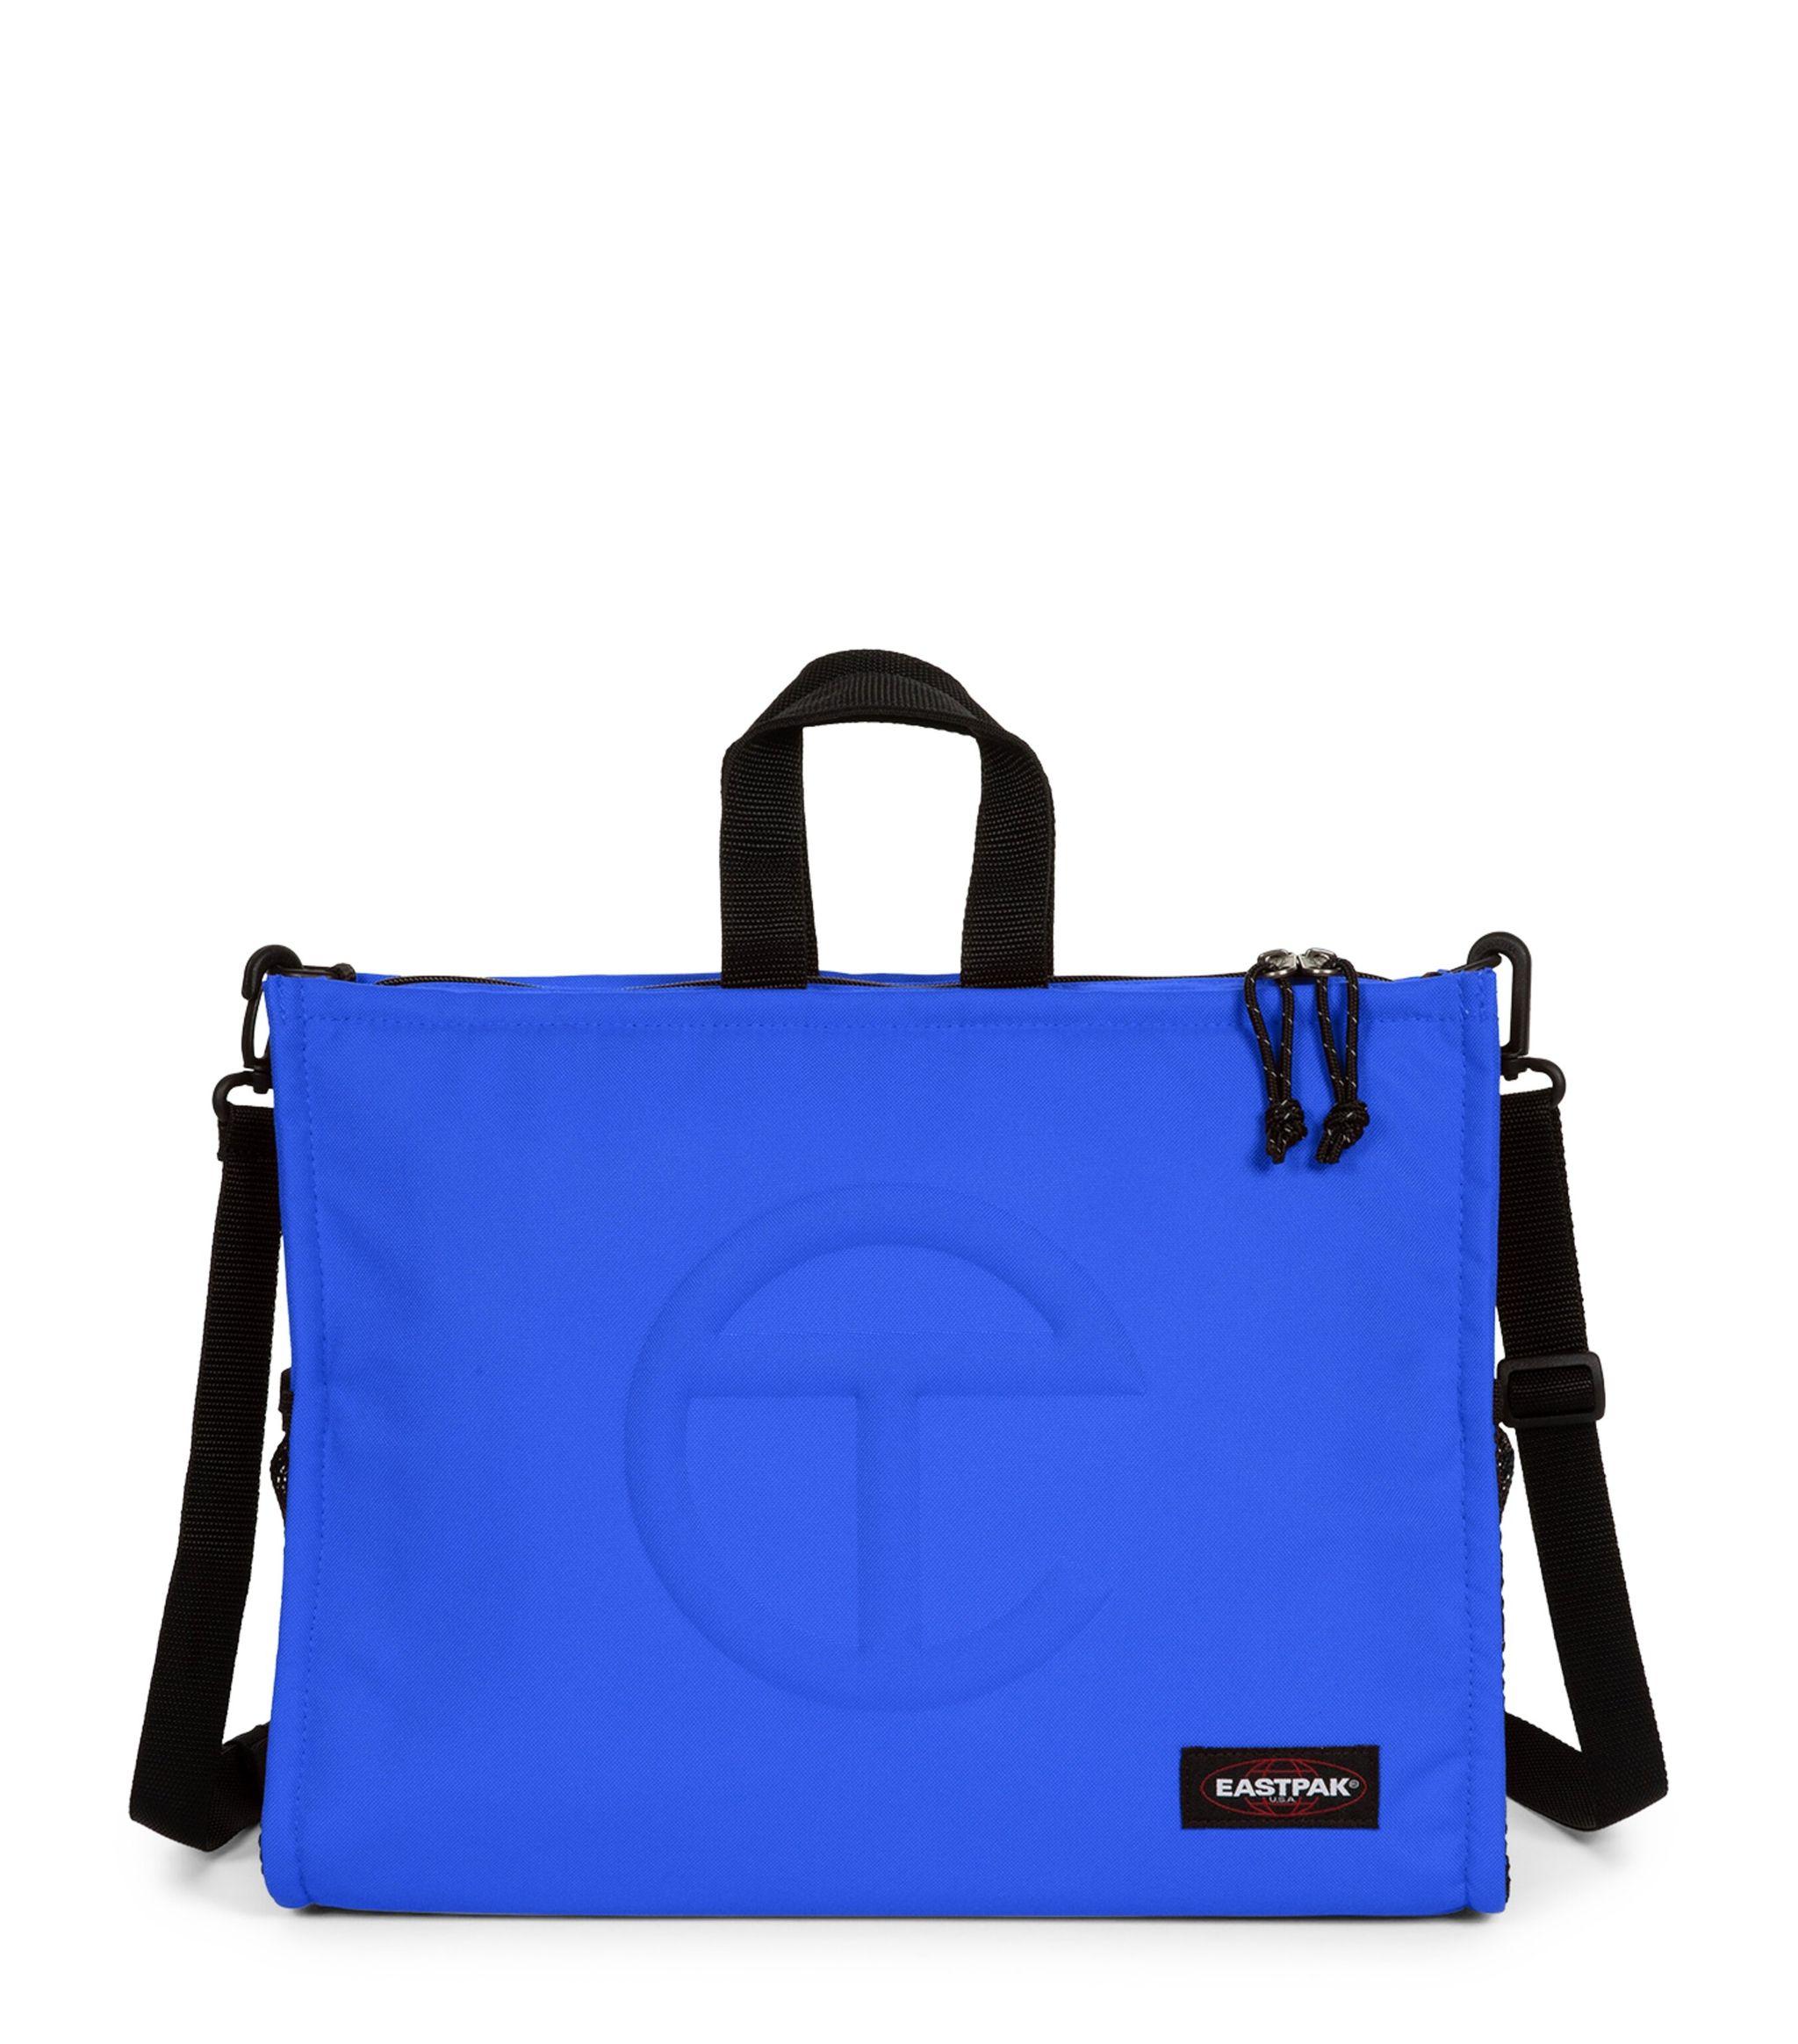 Eastpak X Telfar Medium Shopper Bag in Blue | Lyst